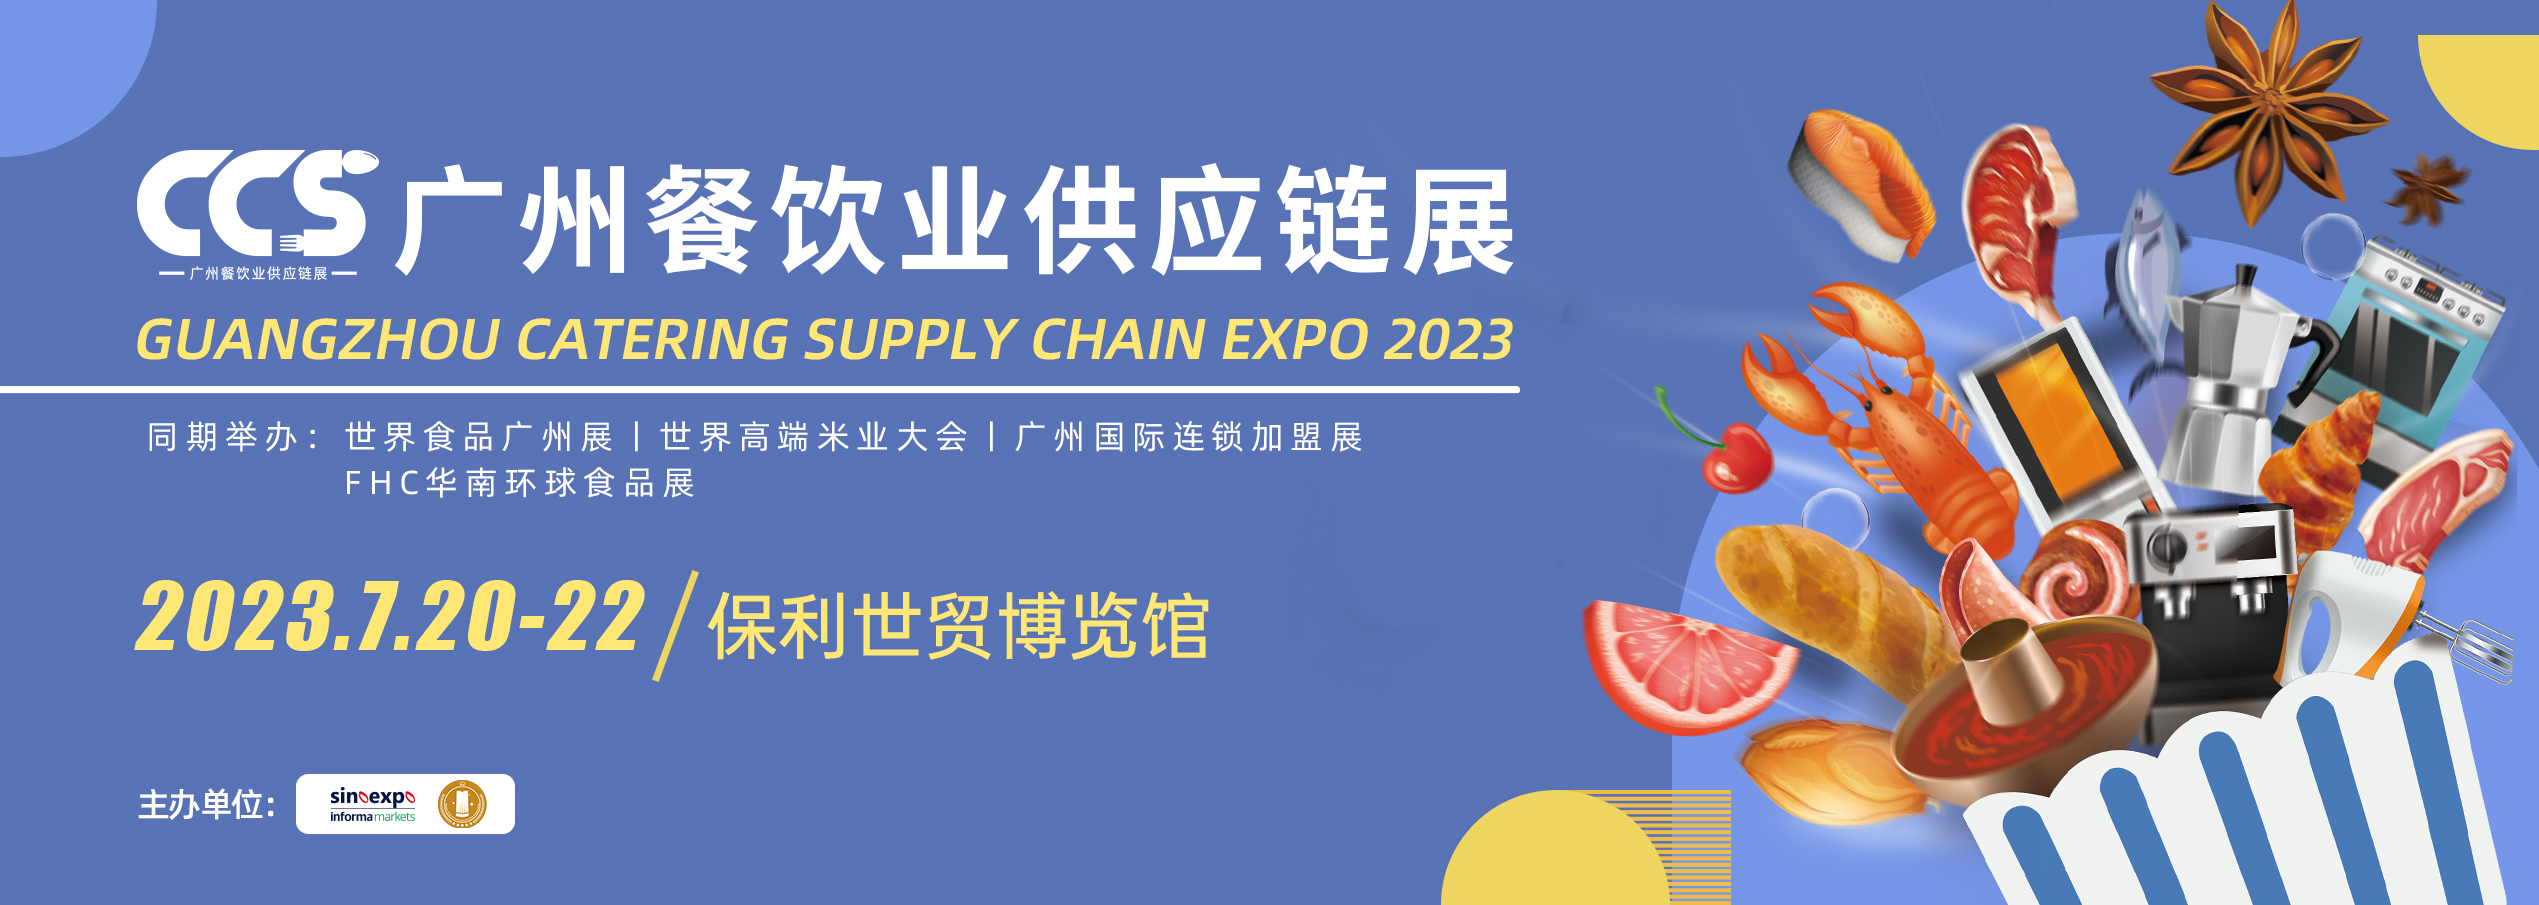 2023供应链官网banner